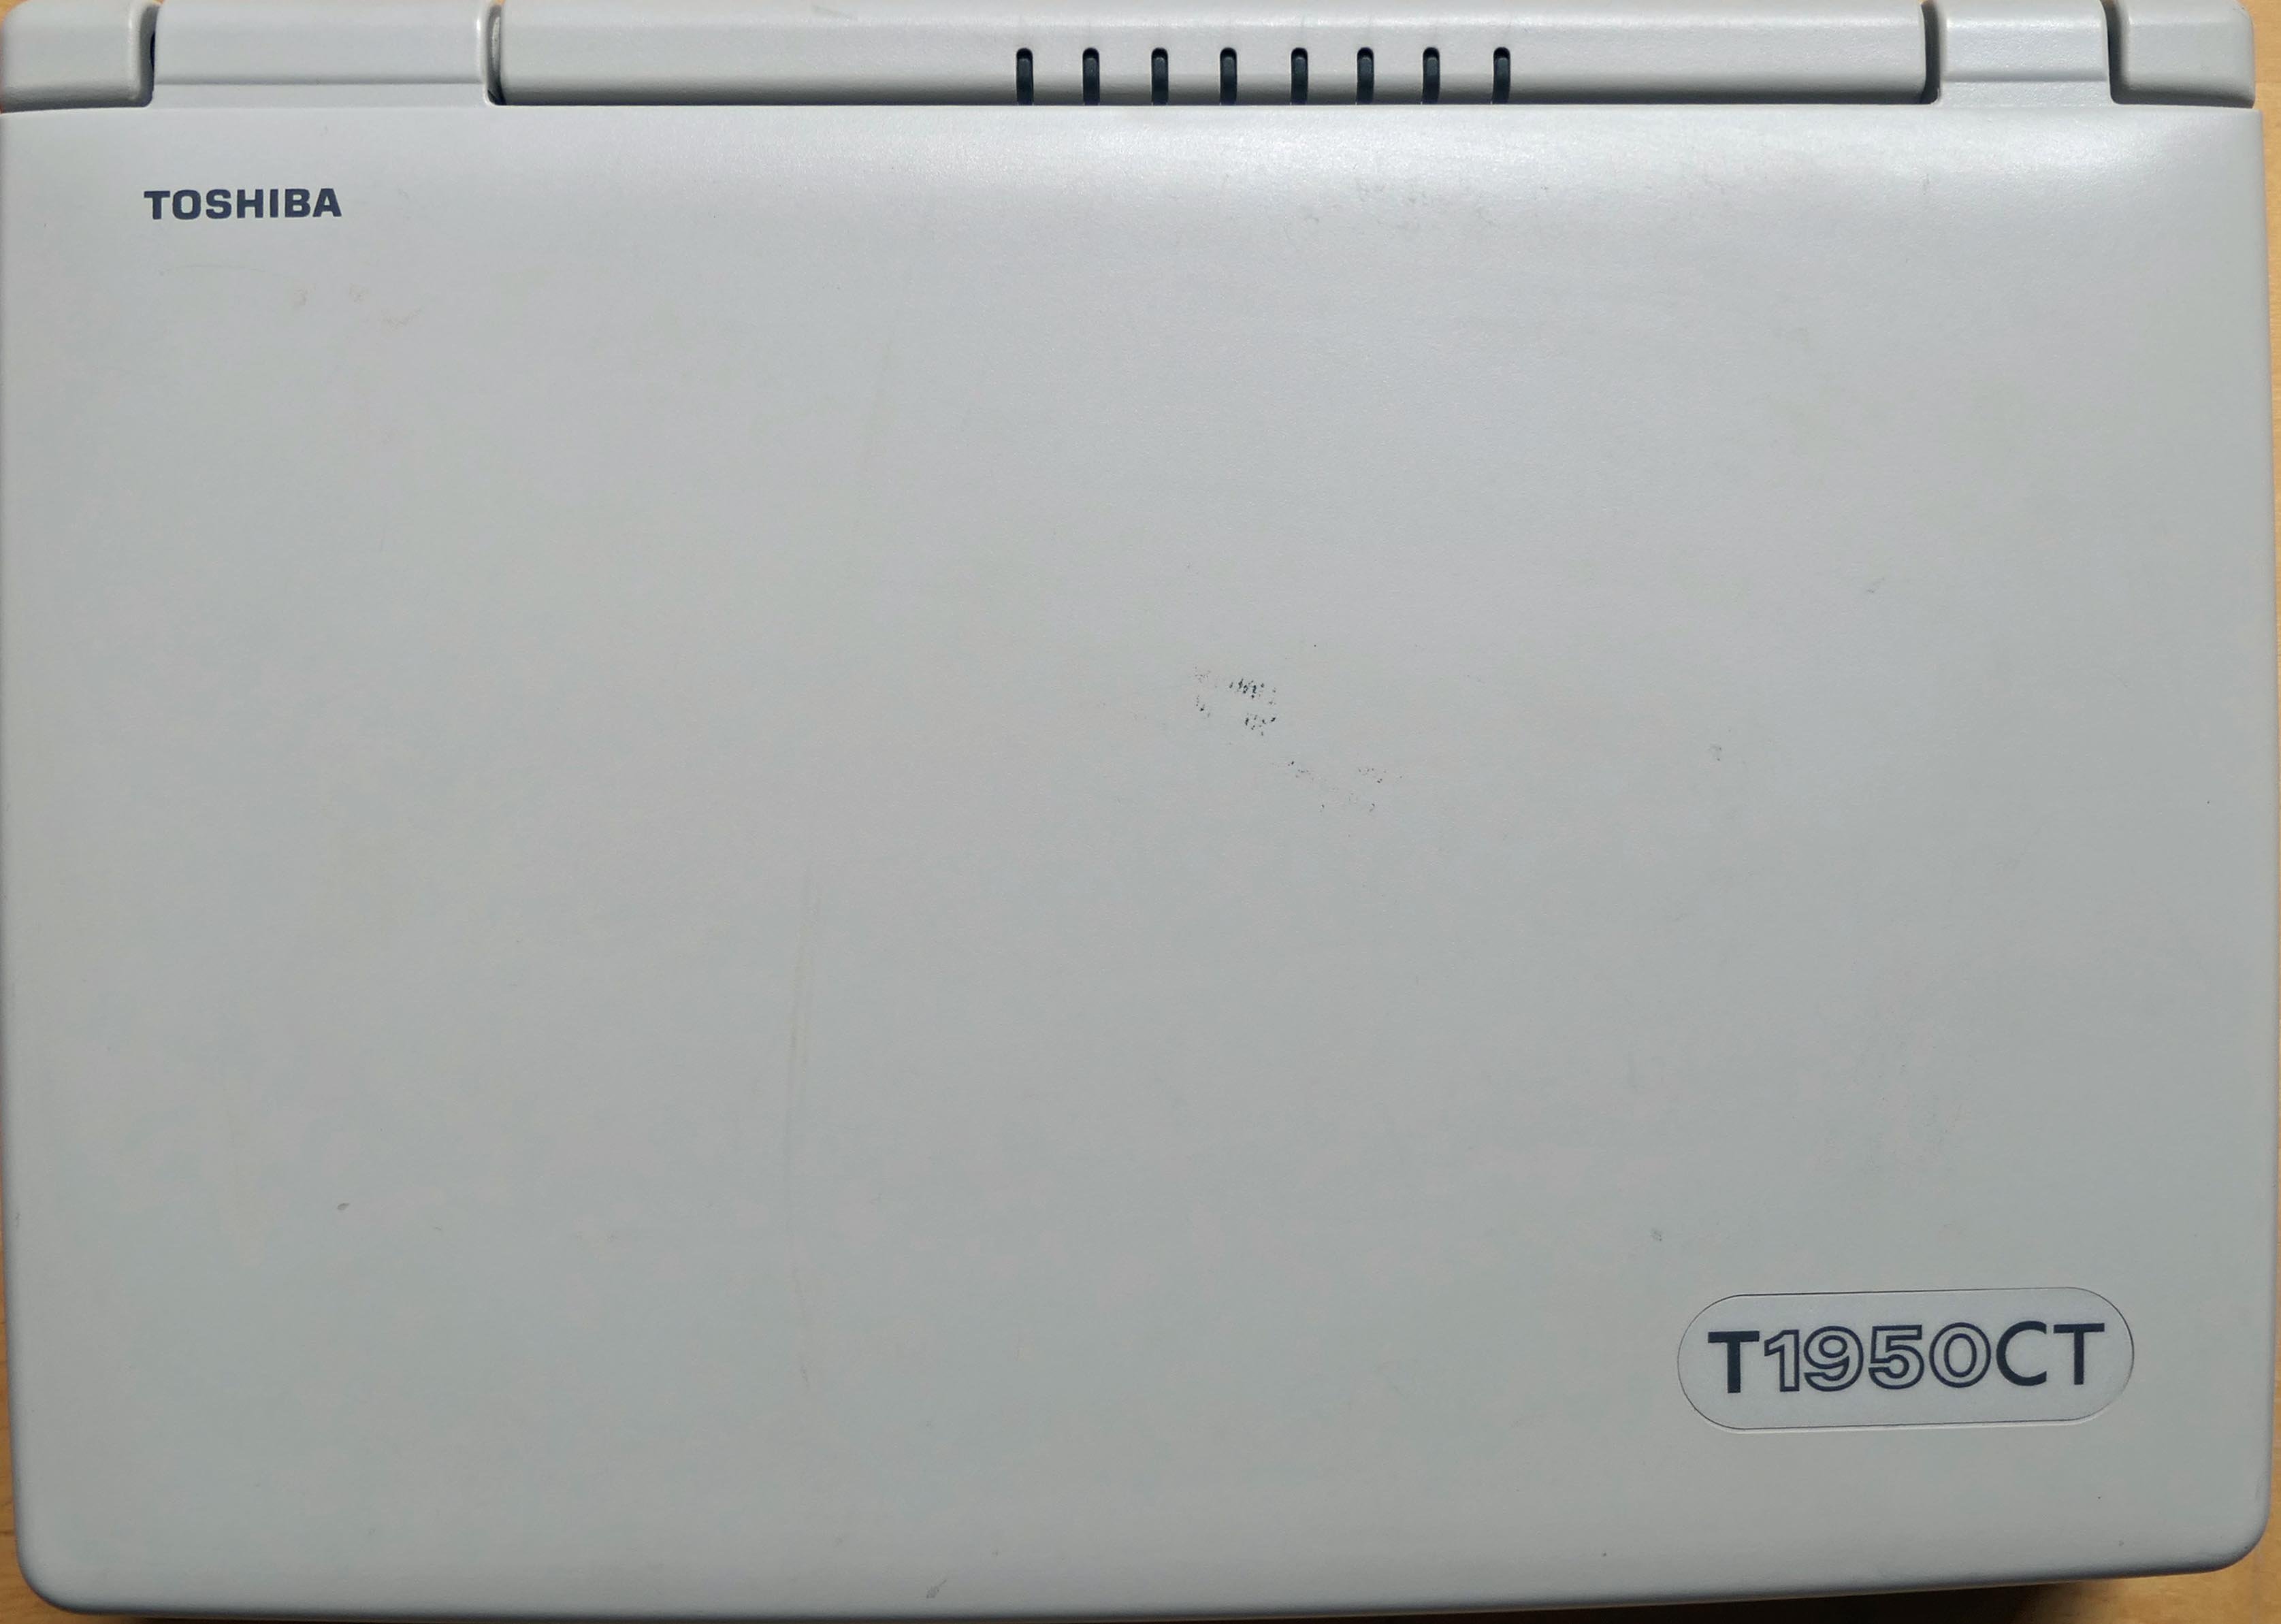 Laptop Computer	Toshiba 1950 CT, (museum comp:ex CC BY-NC-SA)